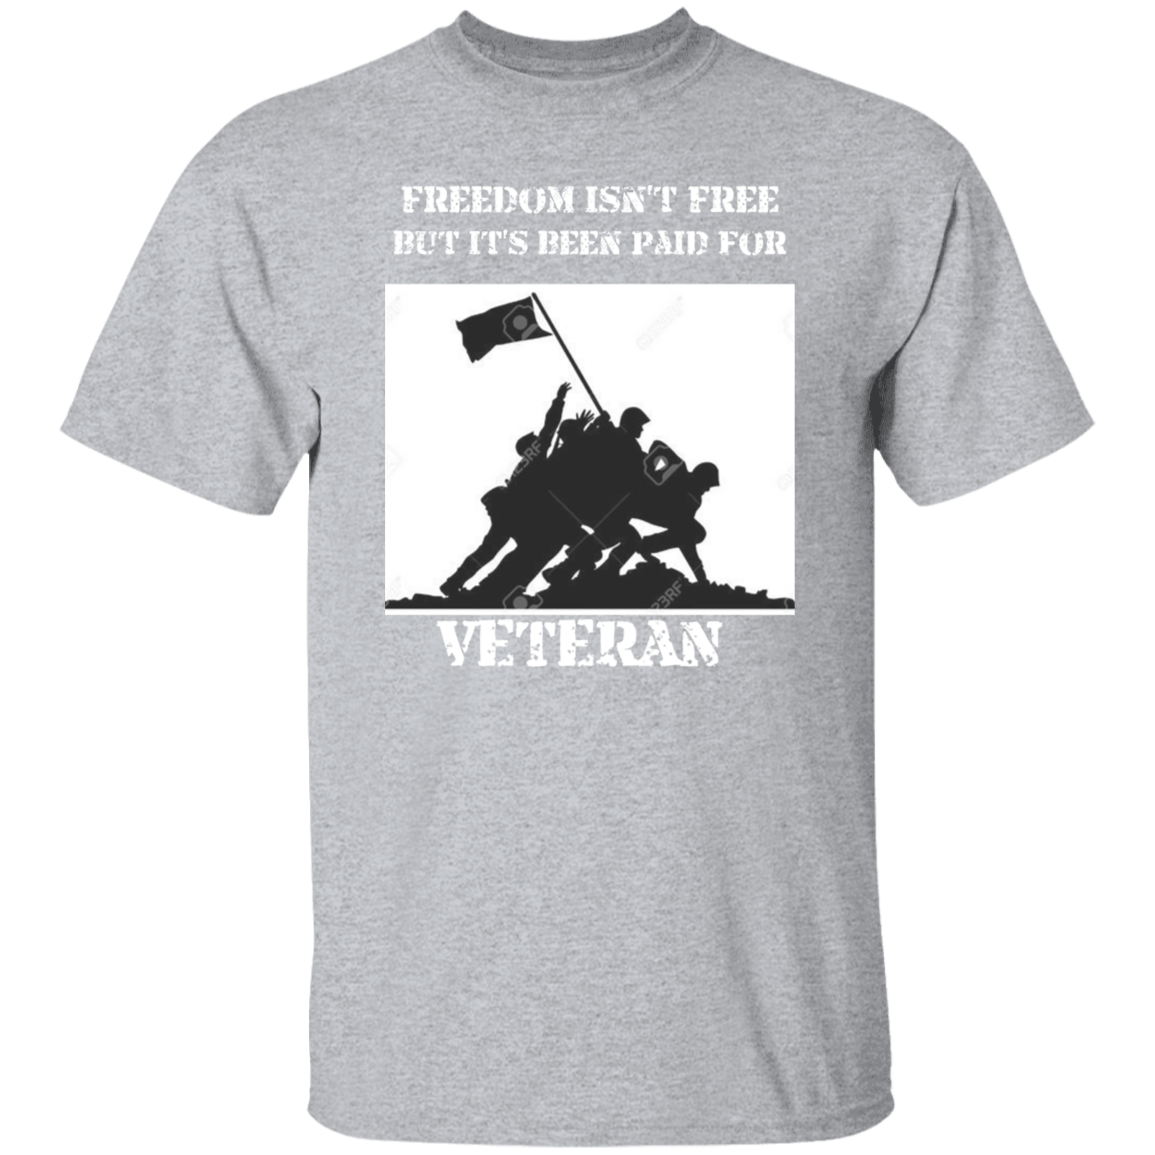 FREEDOM ISN'T FREE  5.3 oz. T-Shirt